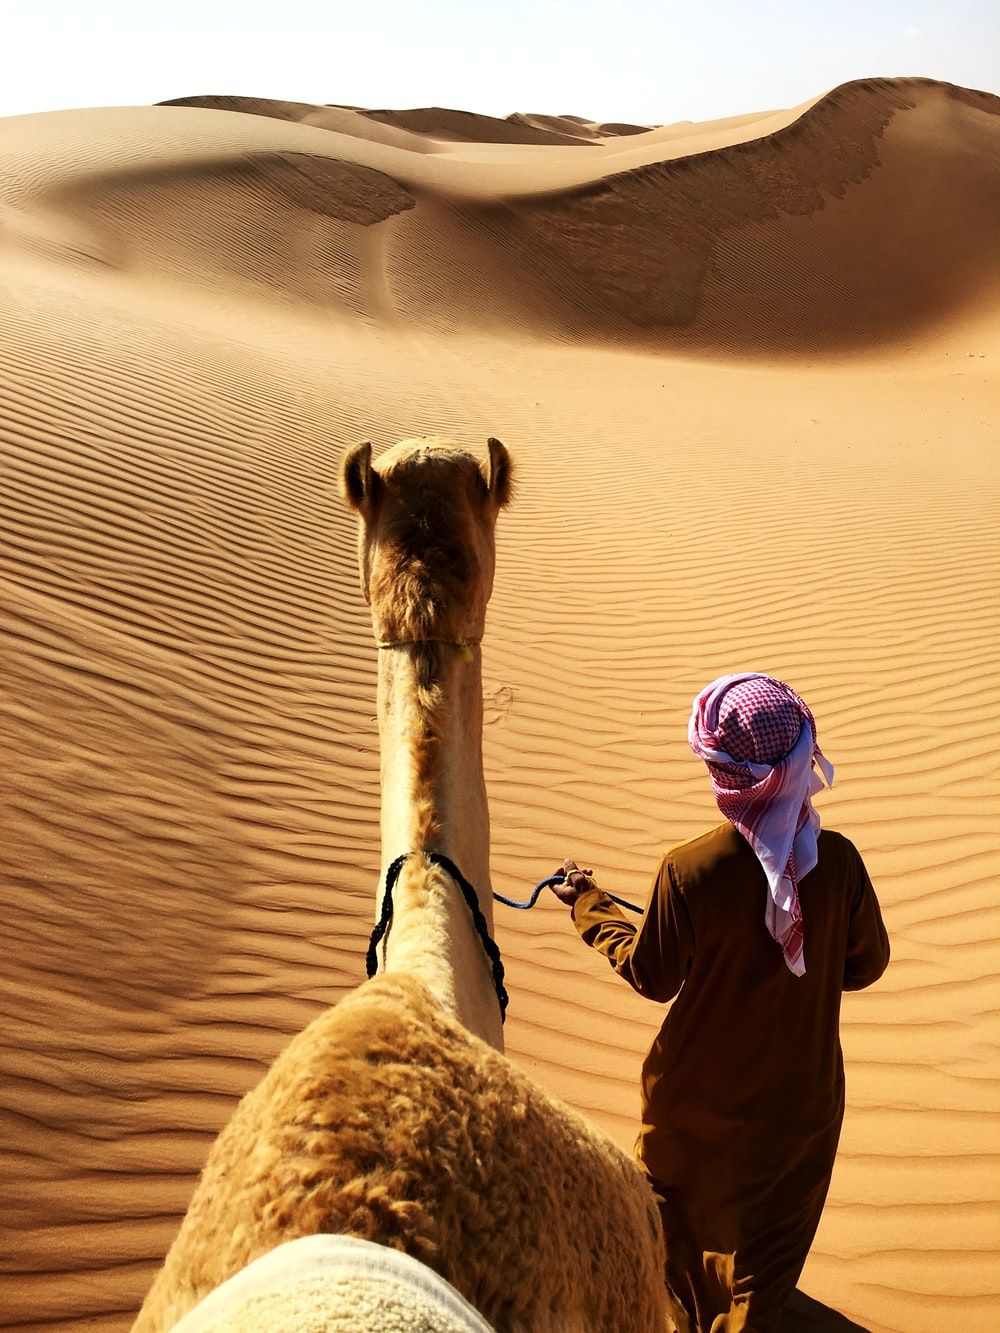 Arabian Desert Picture. Download Free Image